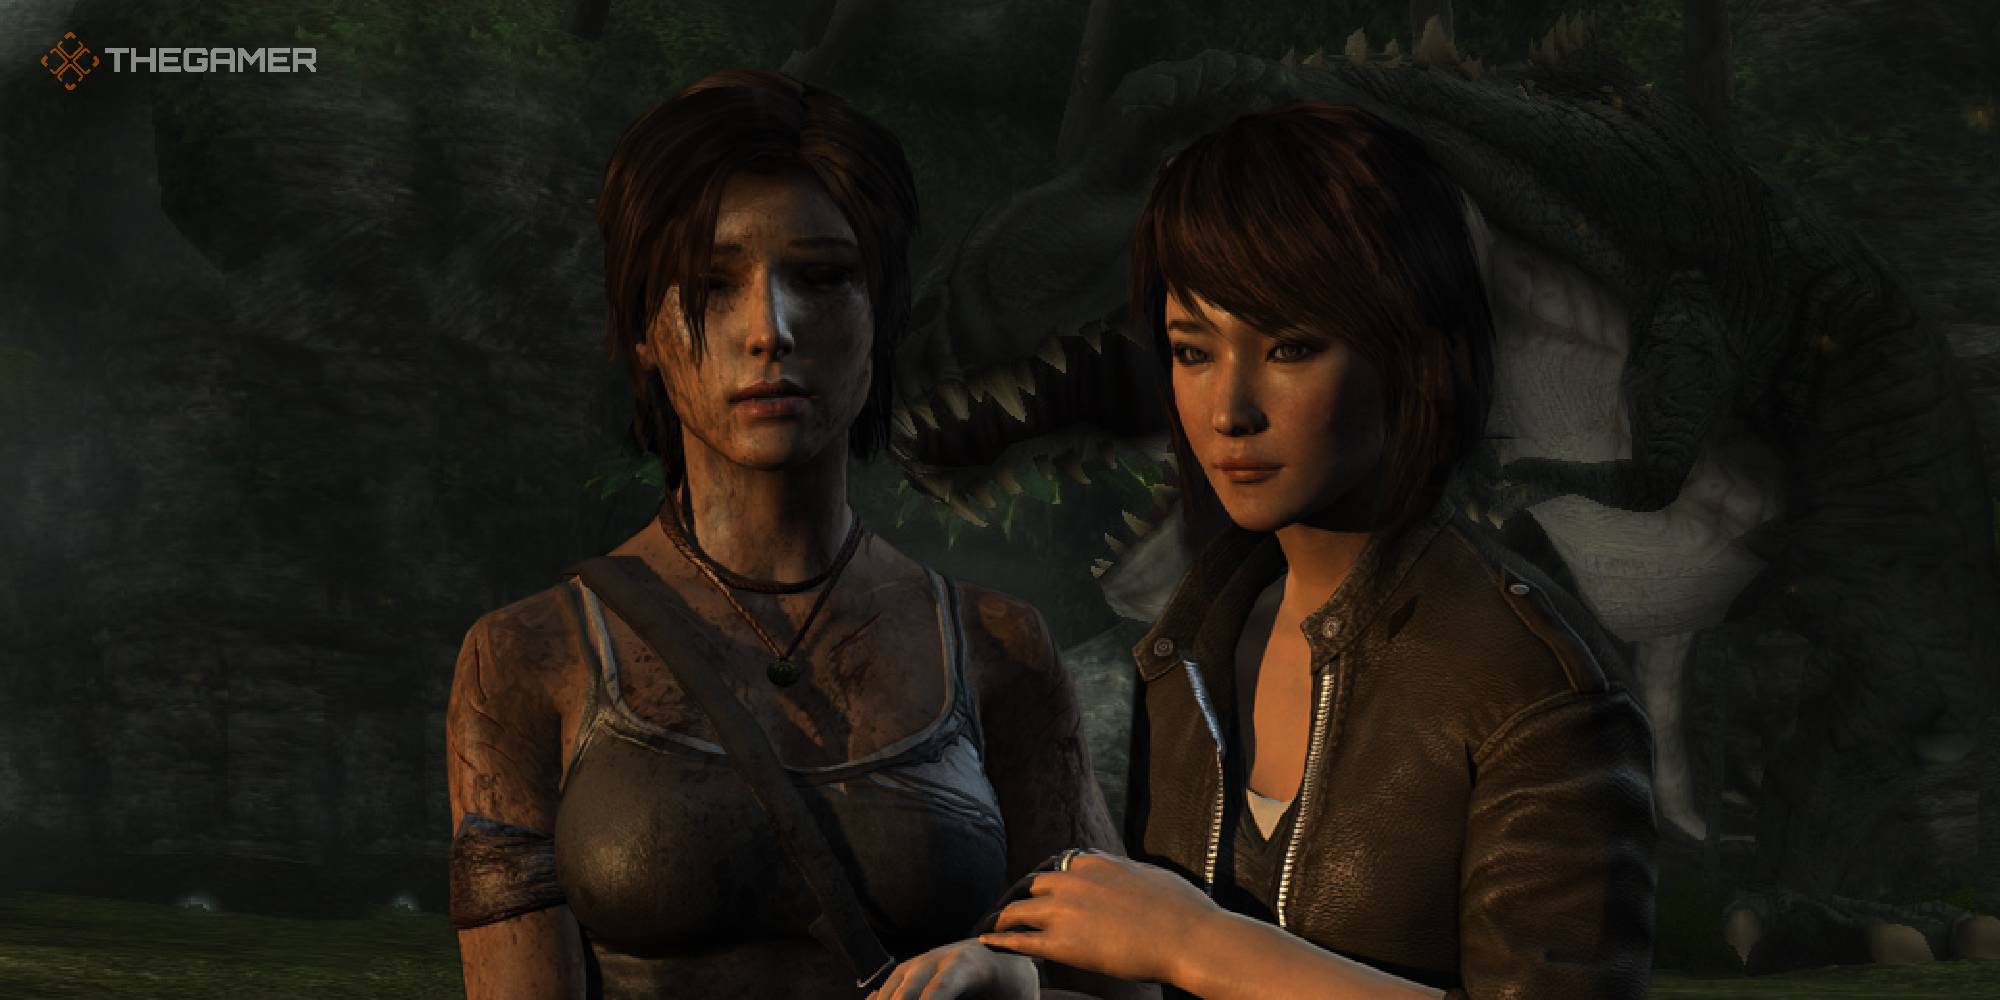 Lara croft lesbian